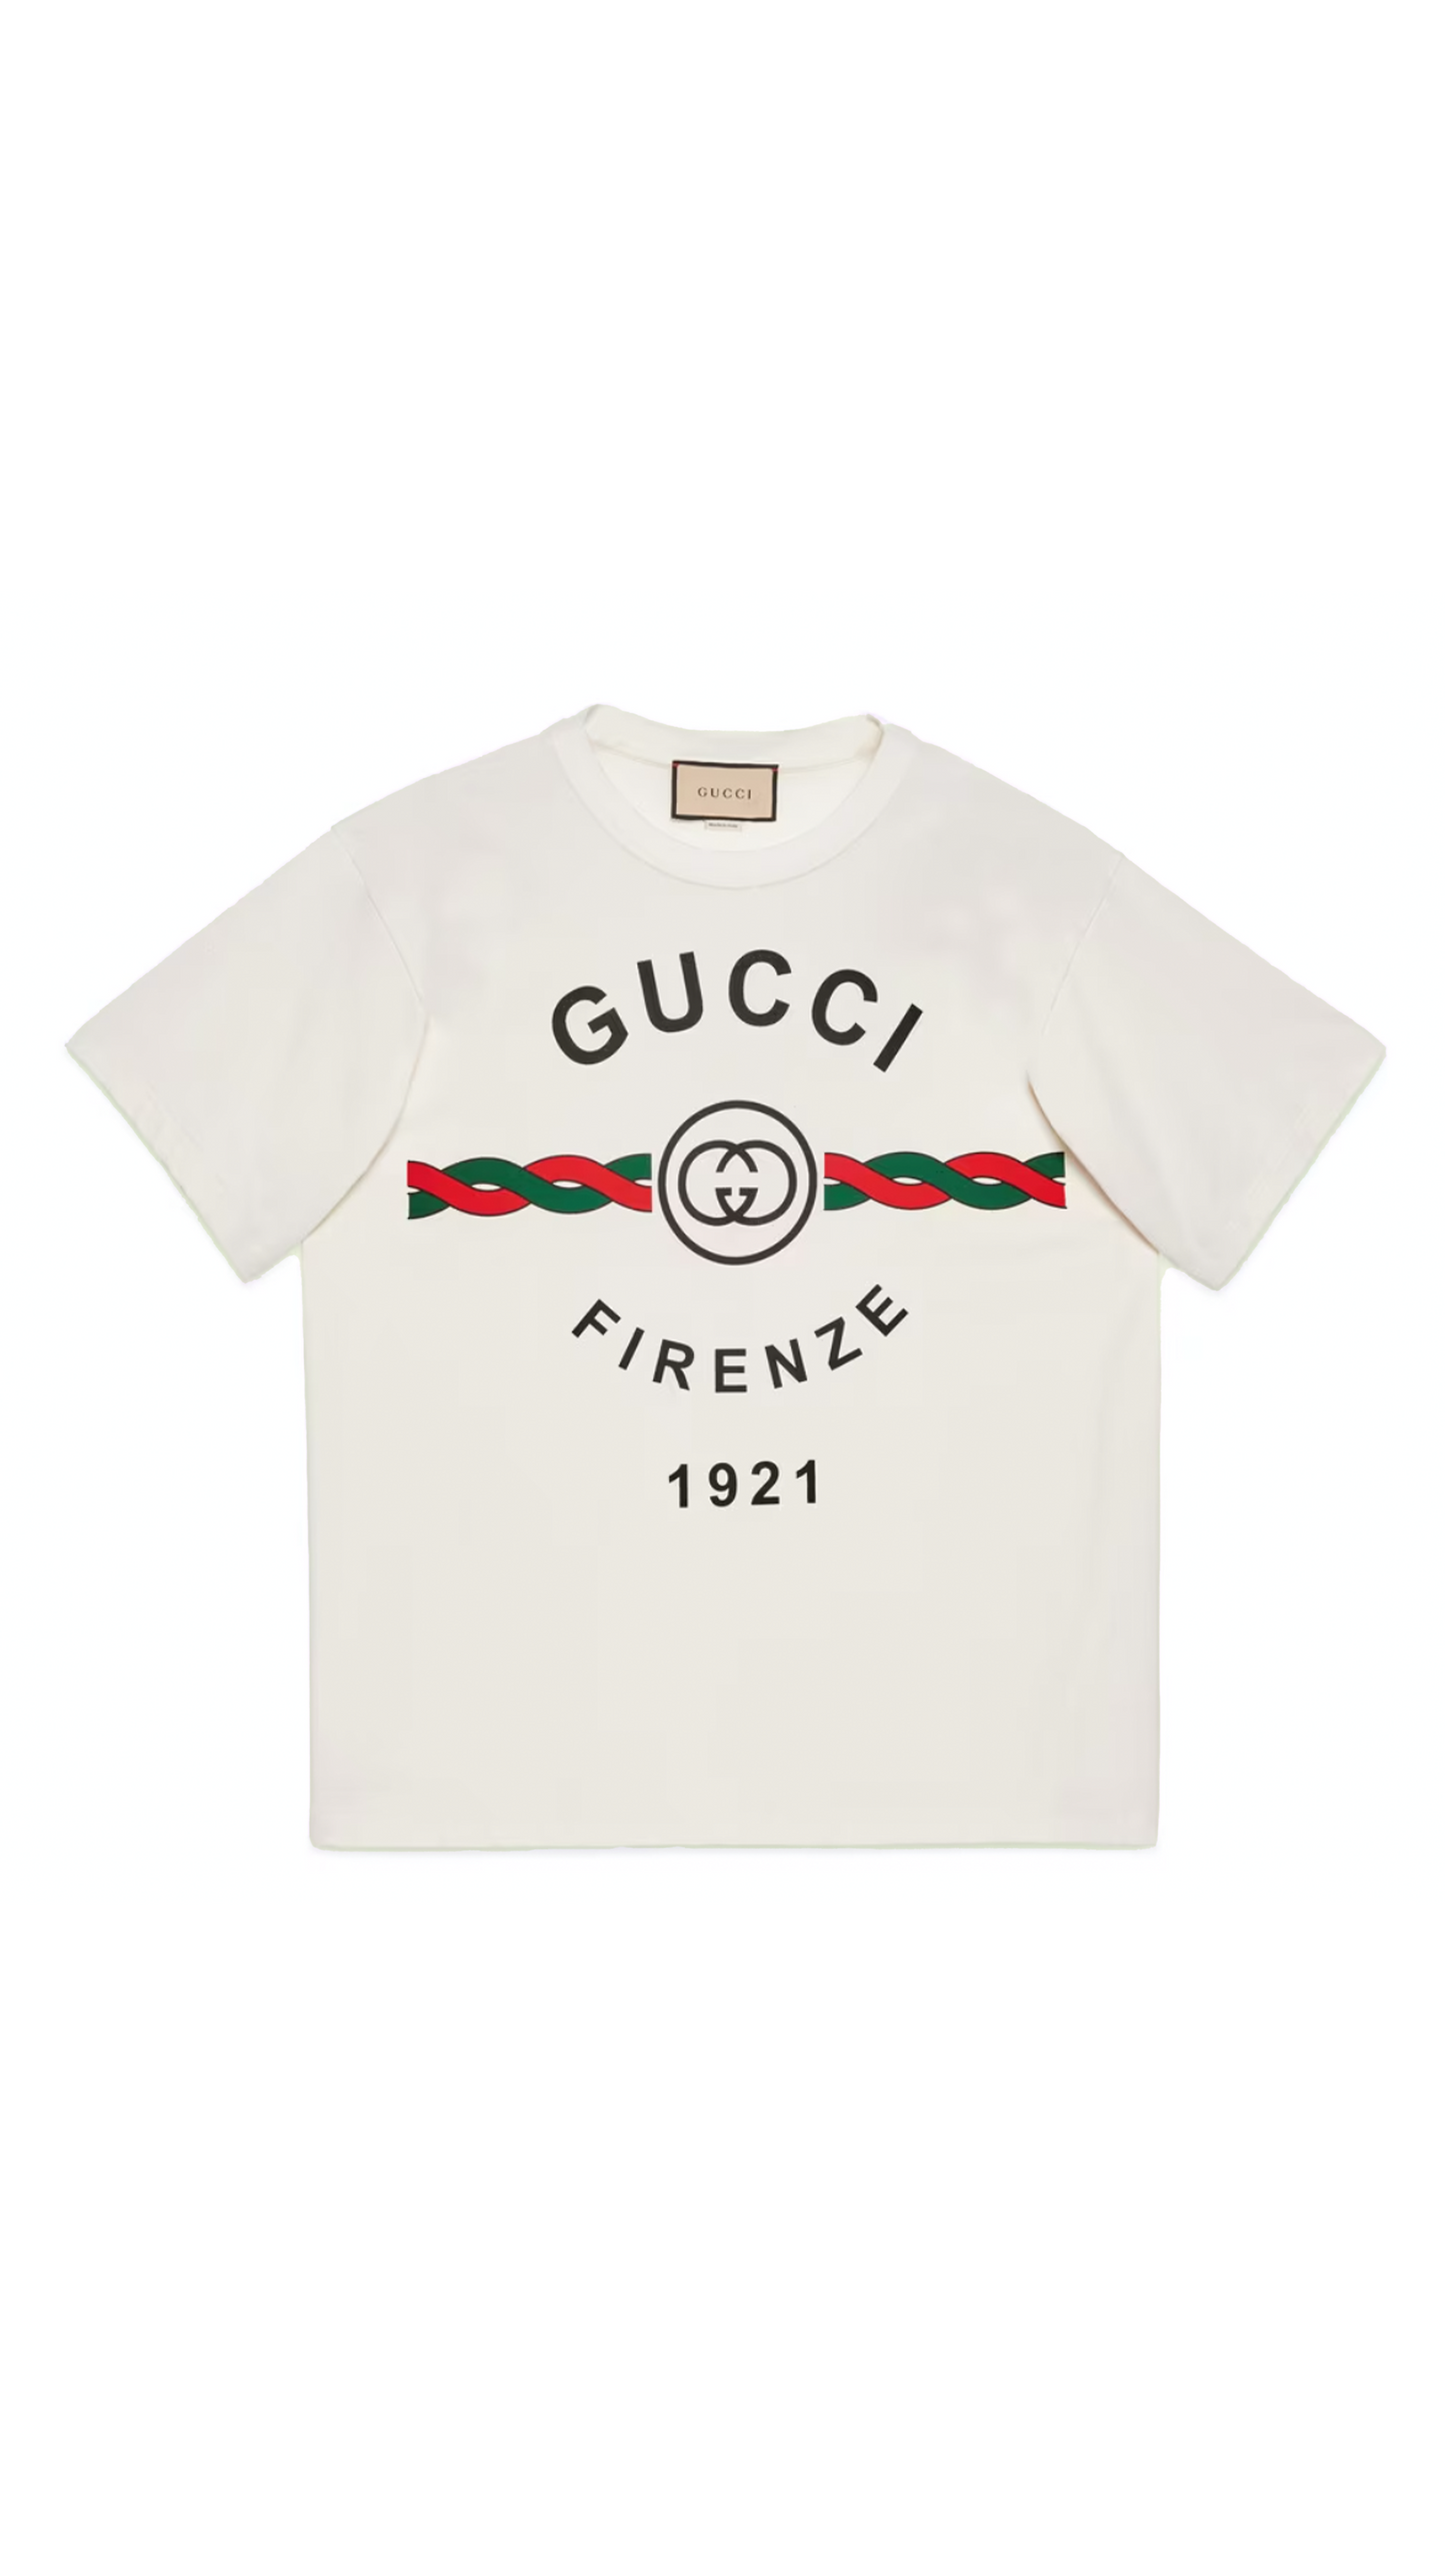 Cotton Jersey 'Gucci Firenze 1921' T-shirt - White